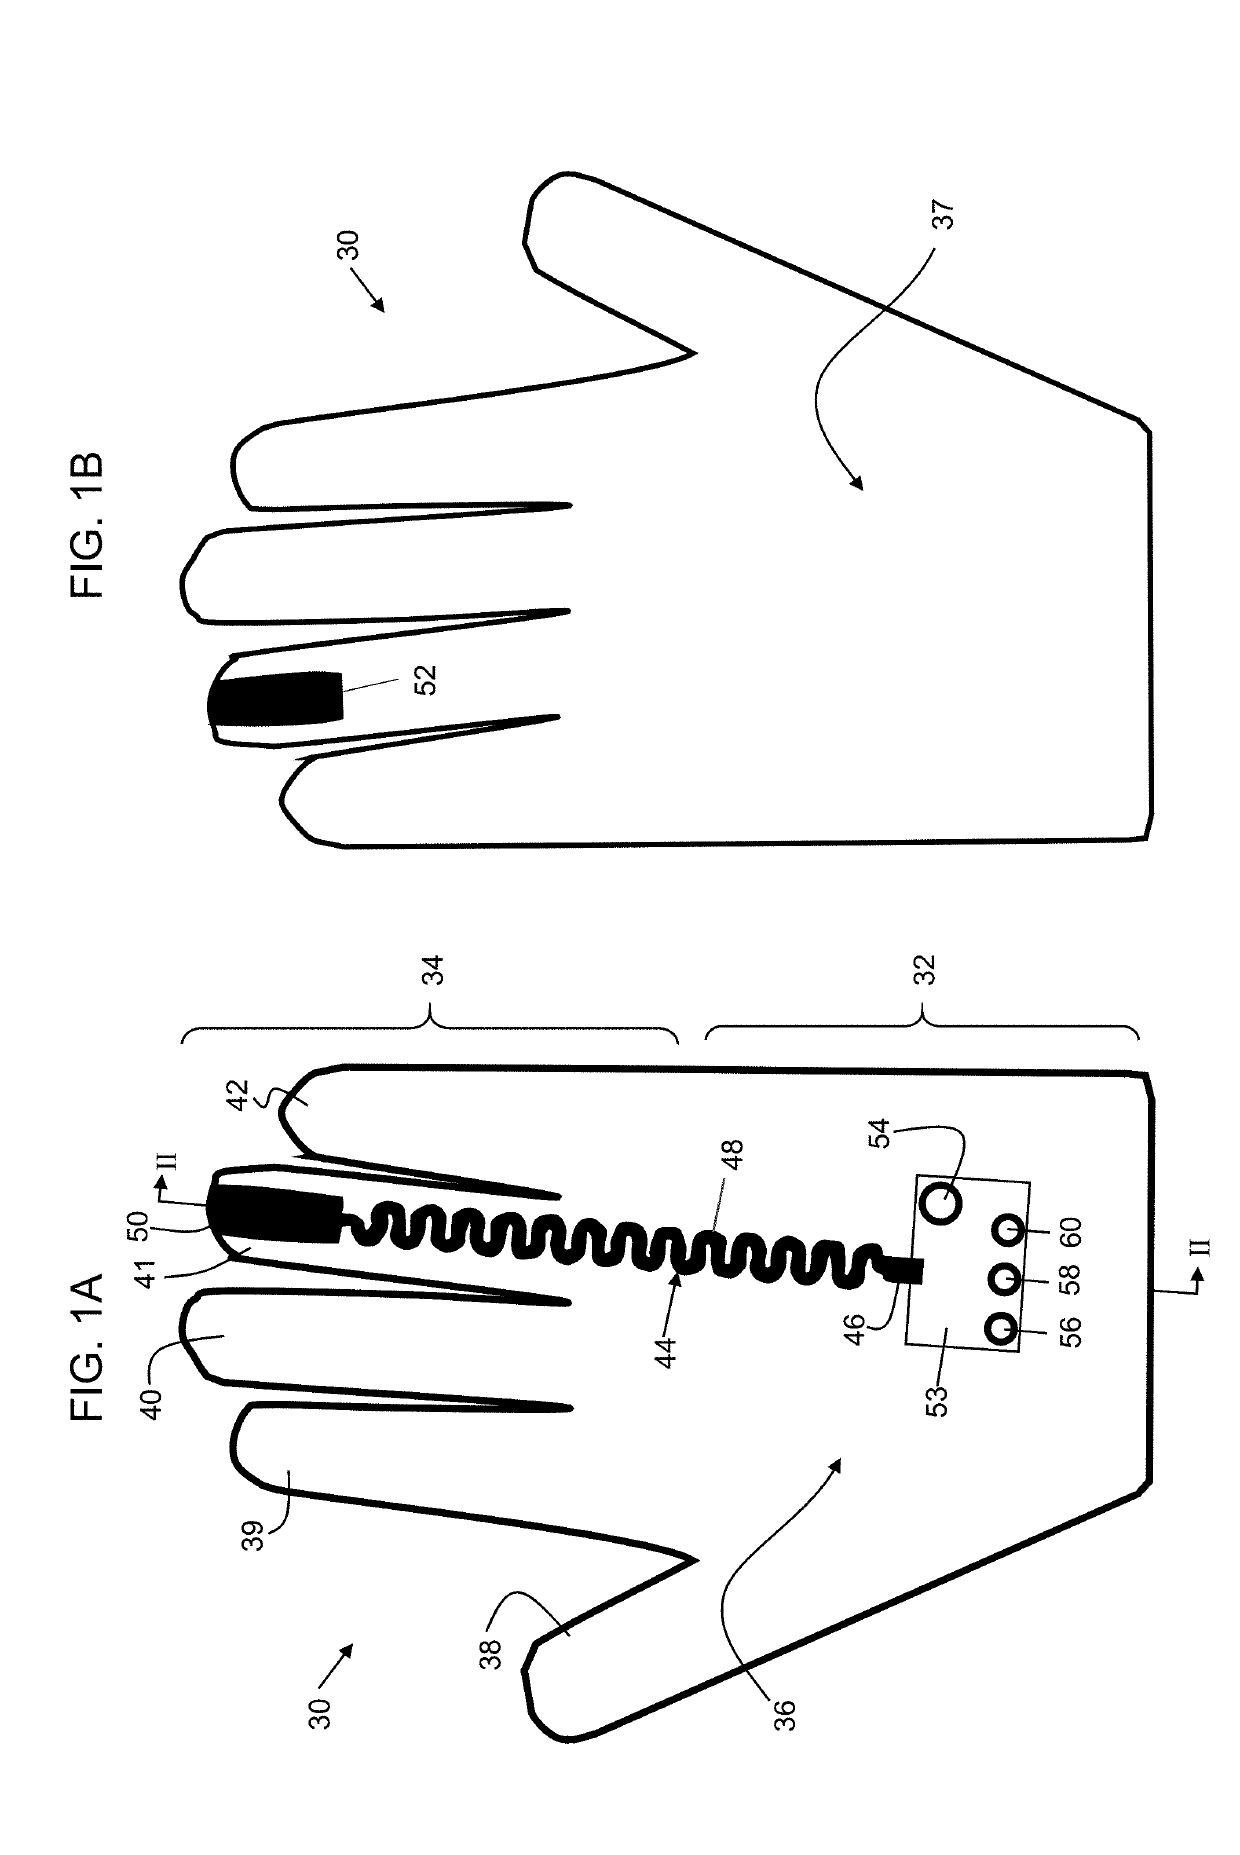 Voltage detecting glove